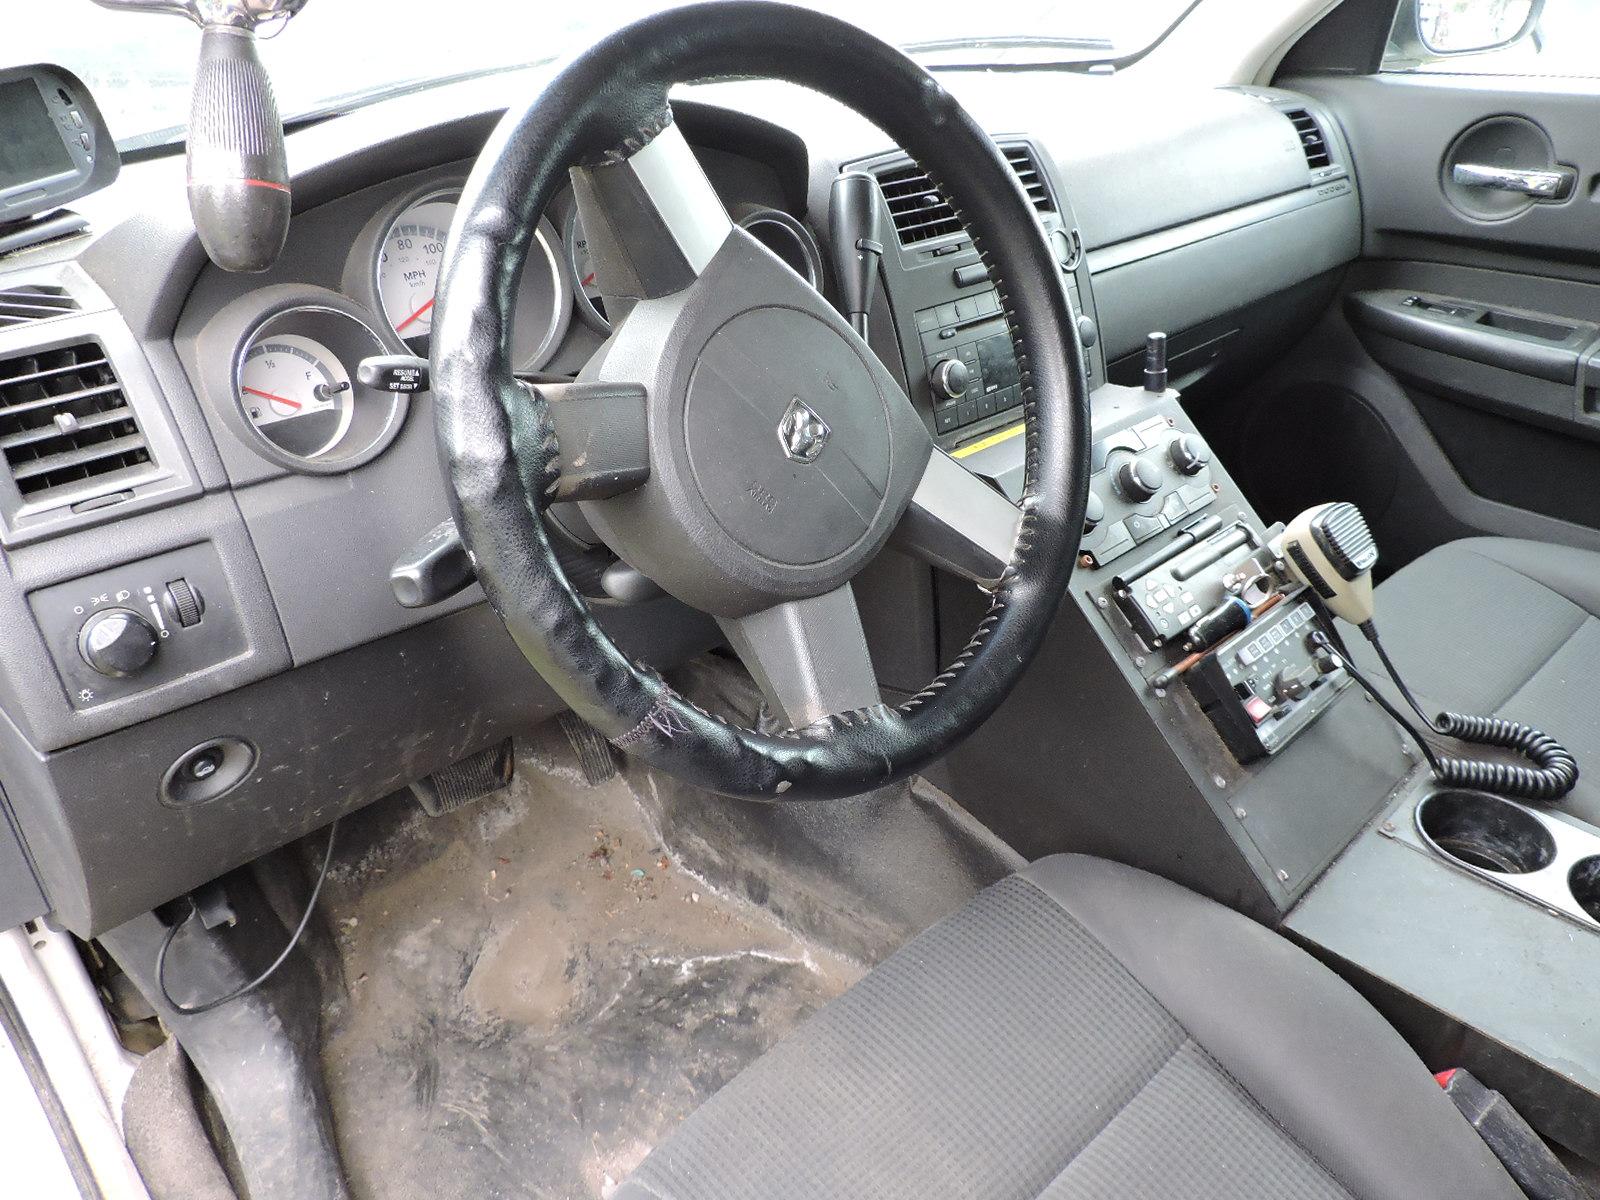 2008 Dodge Charger HEMI V8 - Fully Loaded Former Police Cruiser